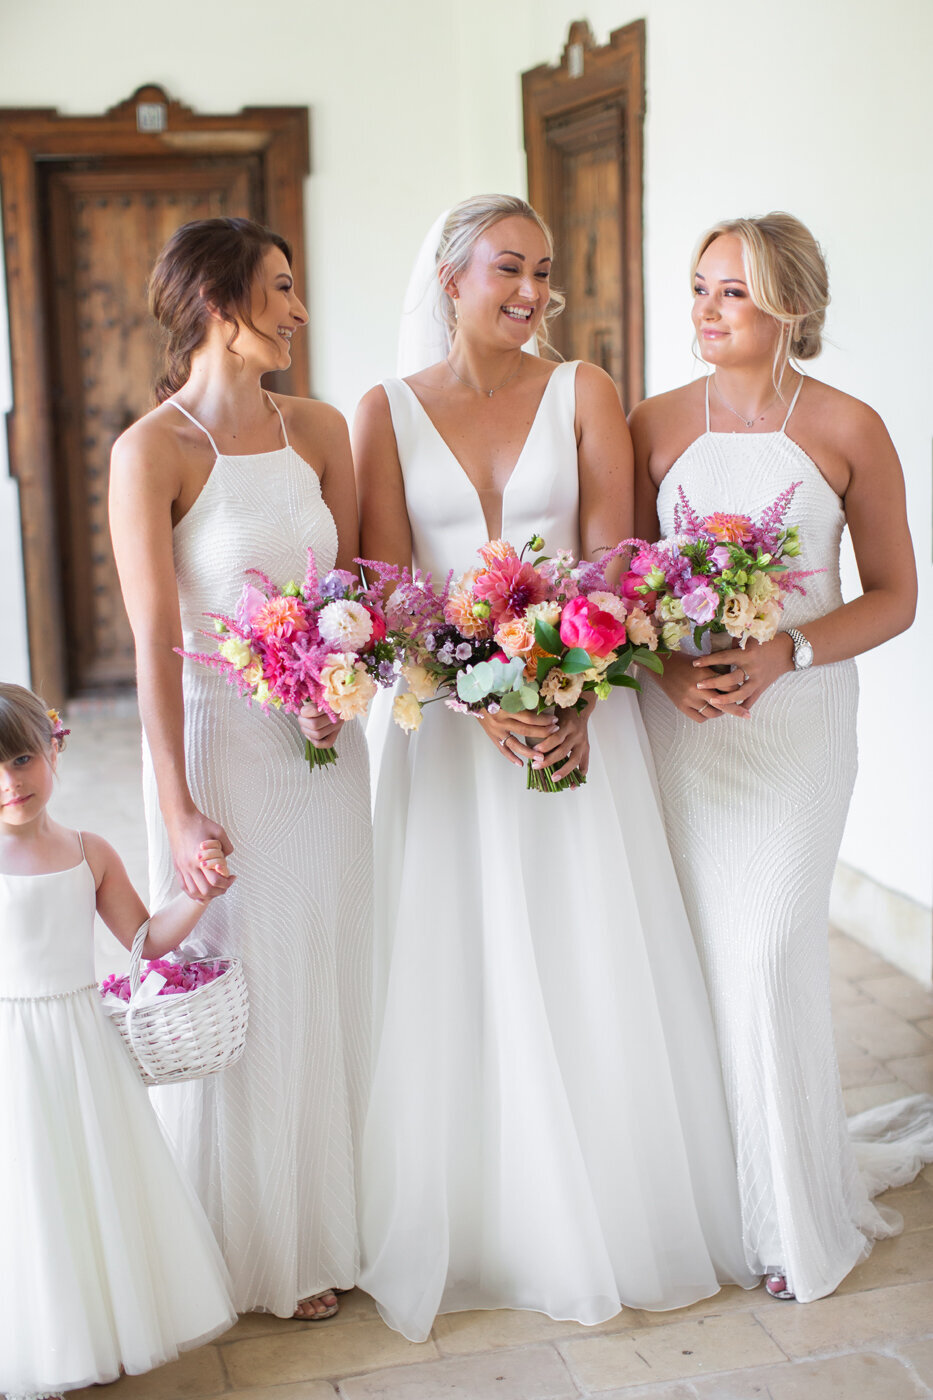 Colourful bridesmaid bouquets against white bridesmaid dresses